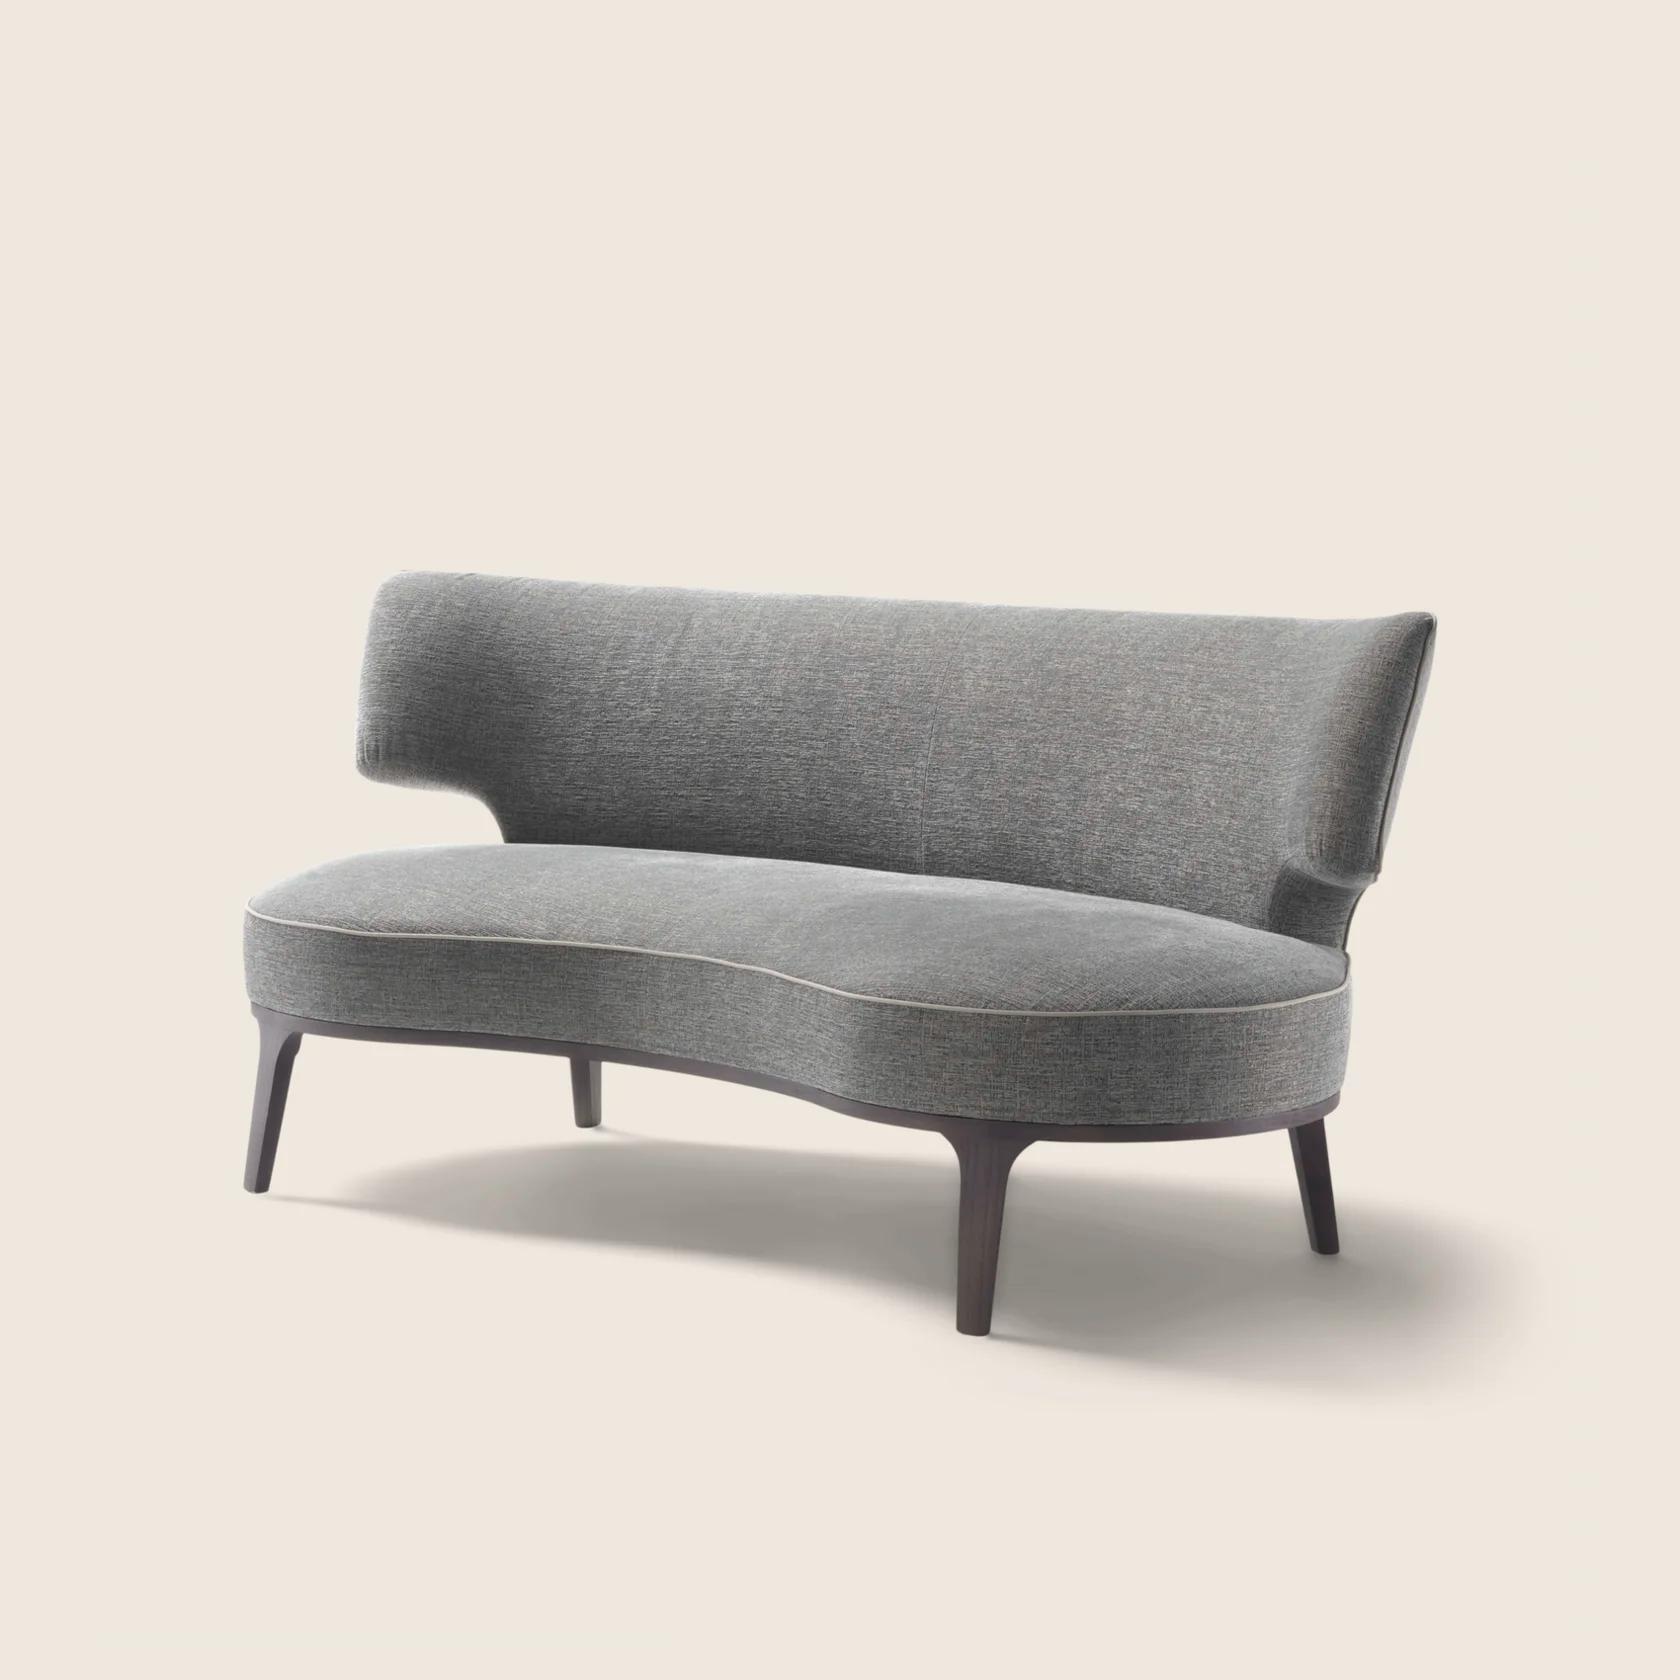 DROP Sofas | Design Made in Italy - Flexform